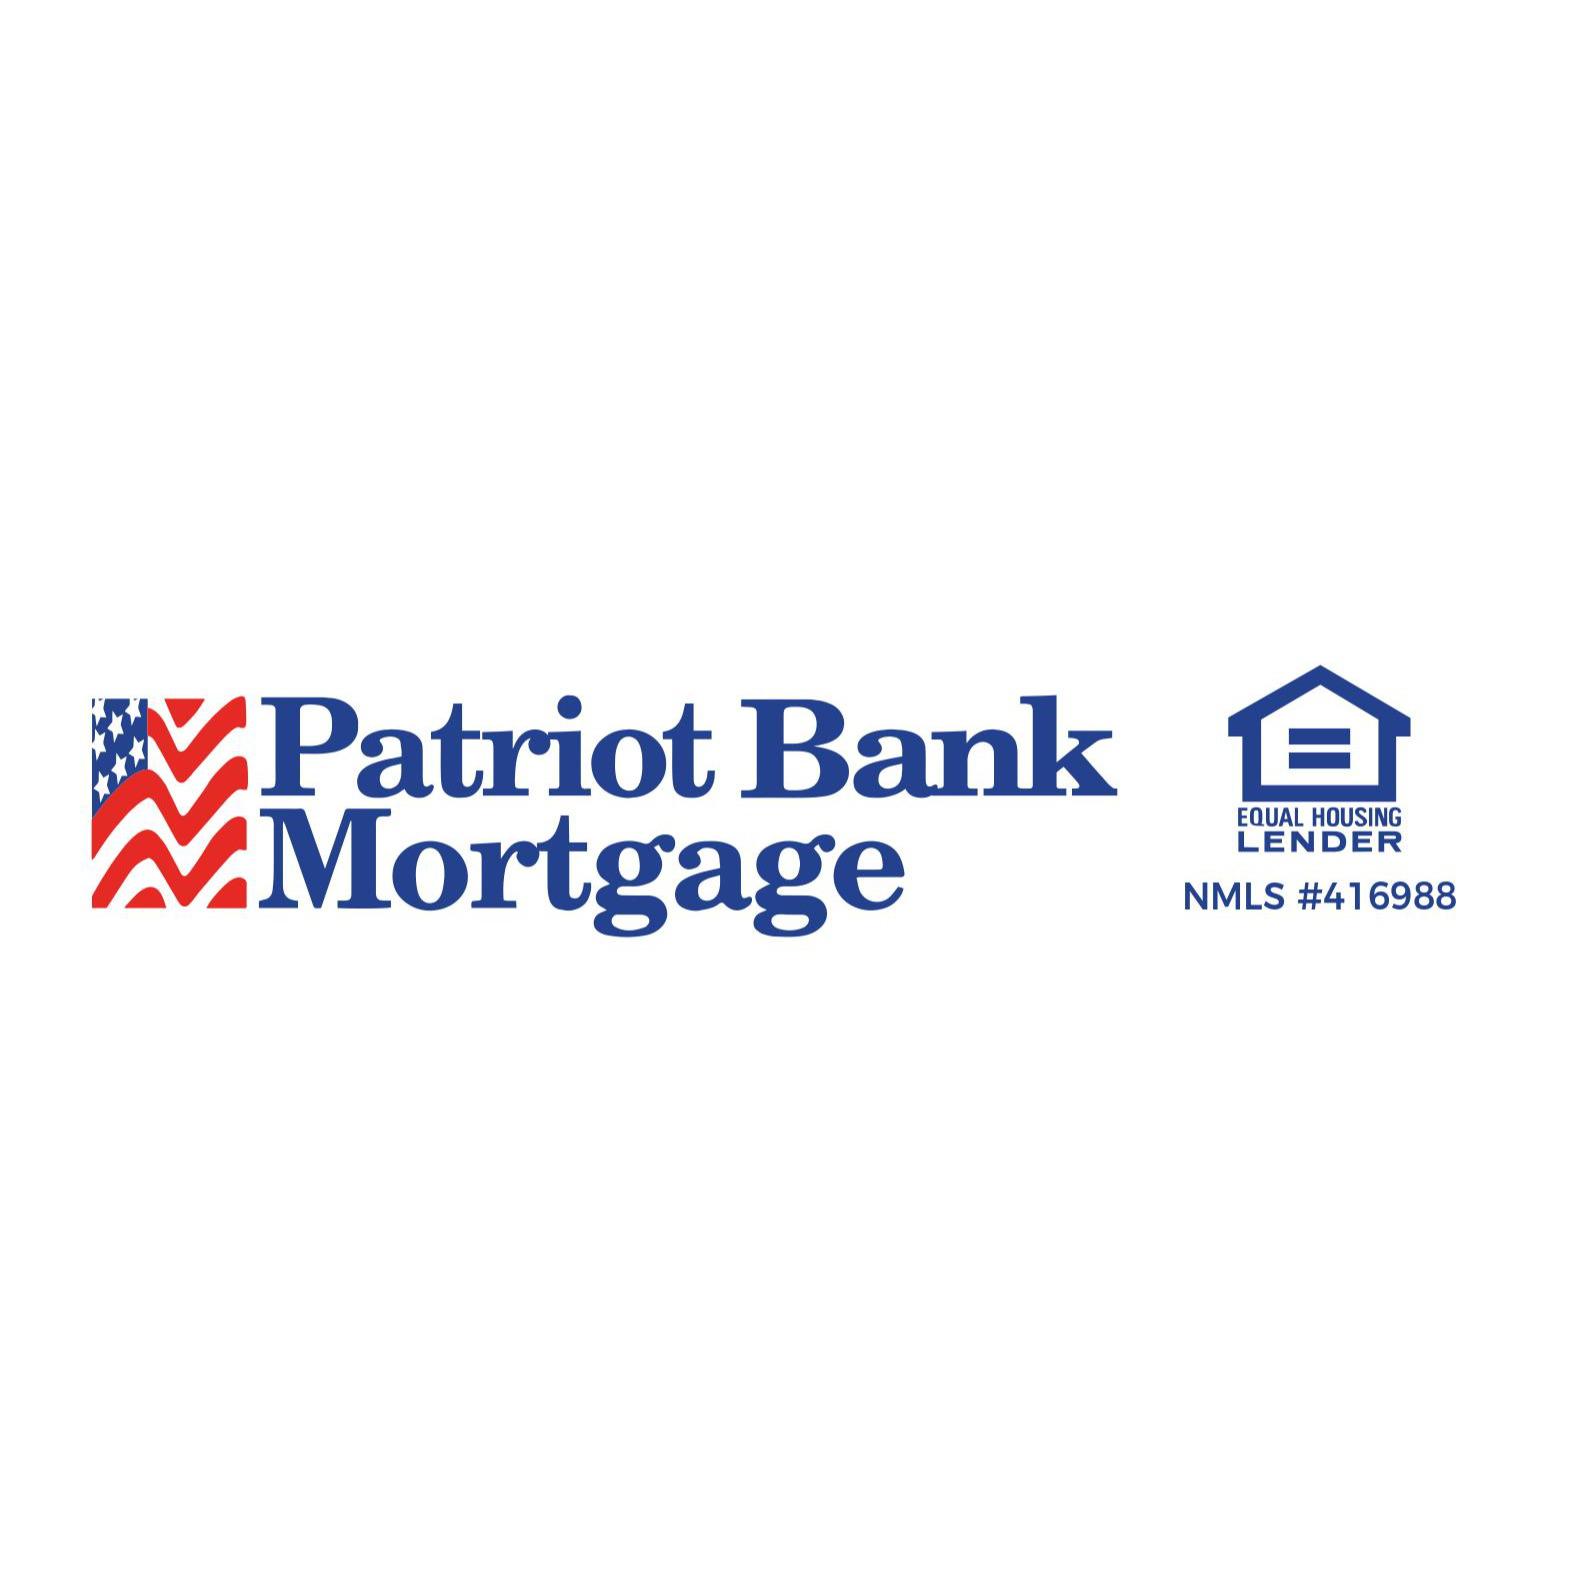 Patriot Bank Mortgage Memphis (901)450-6016